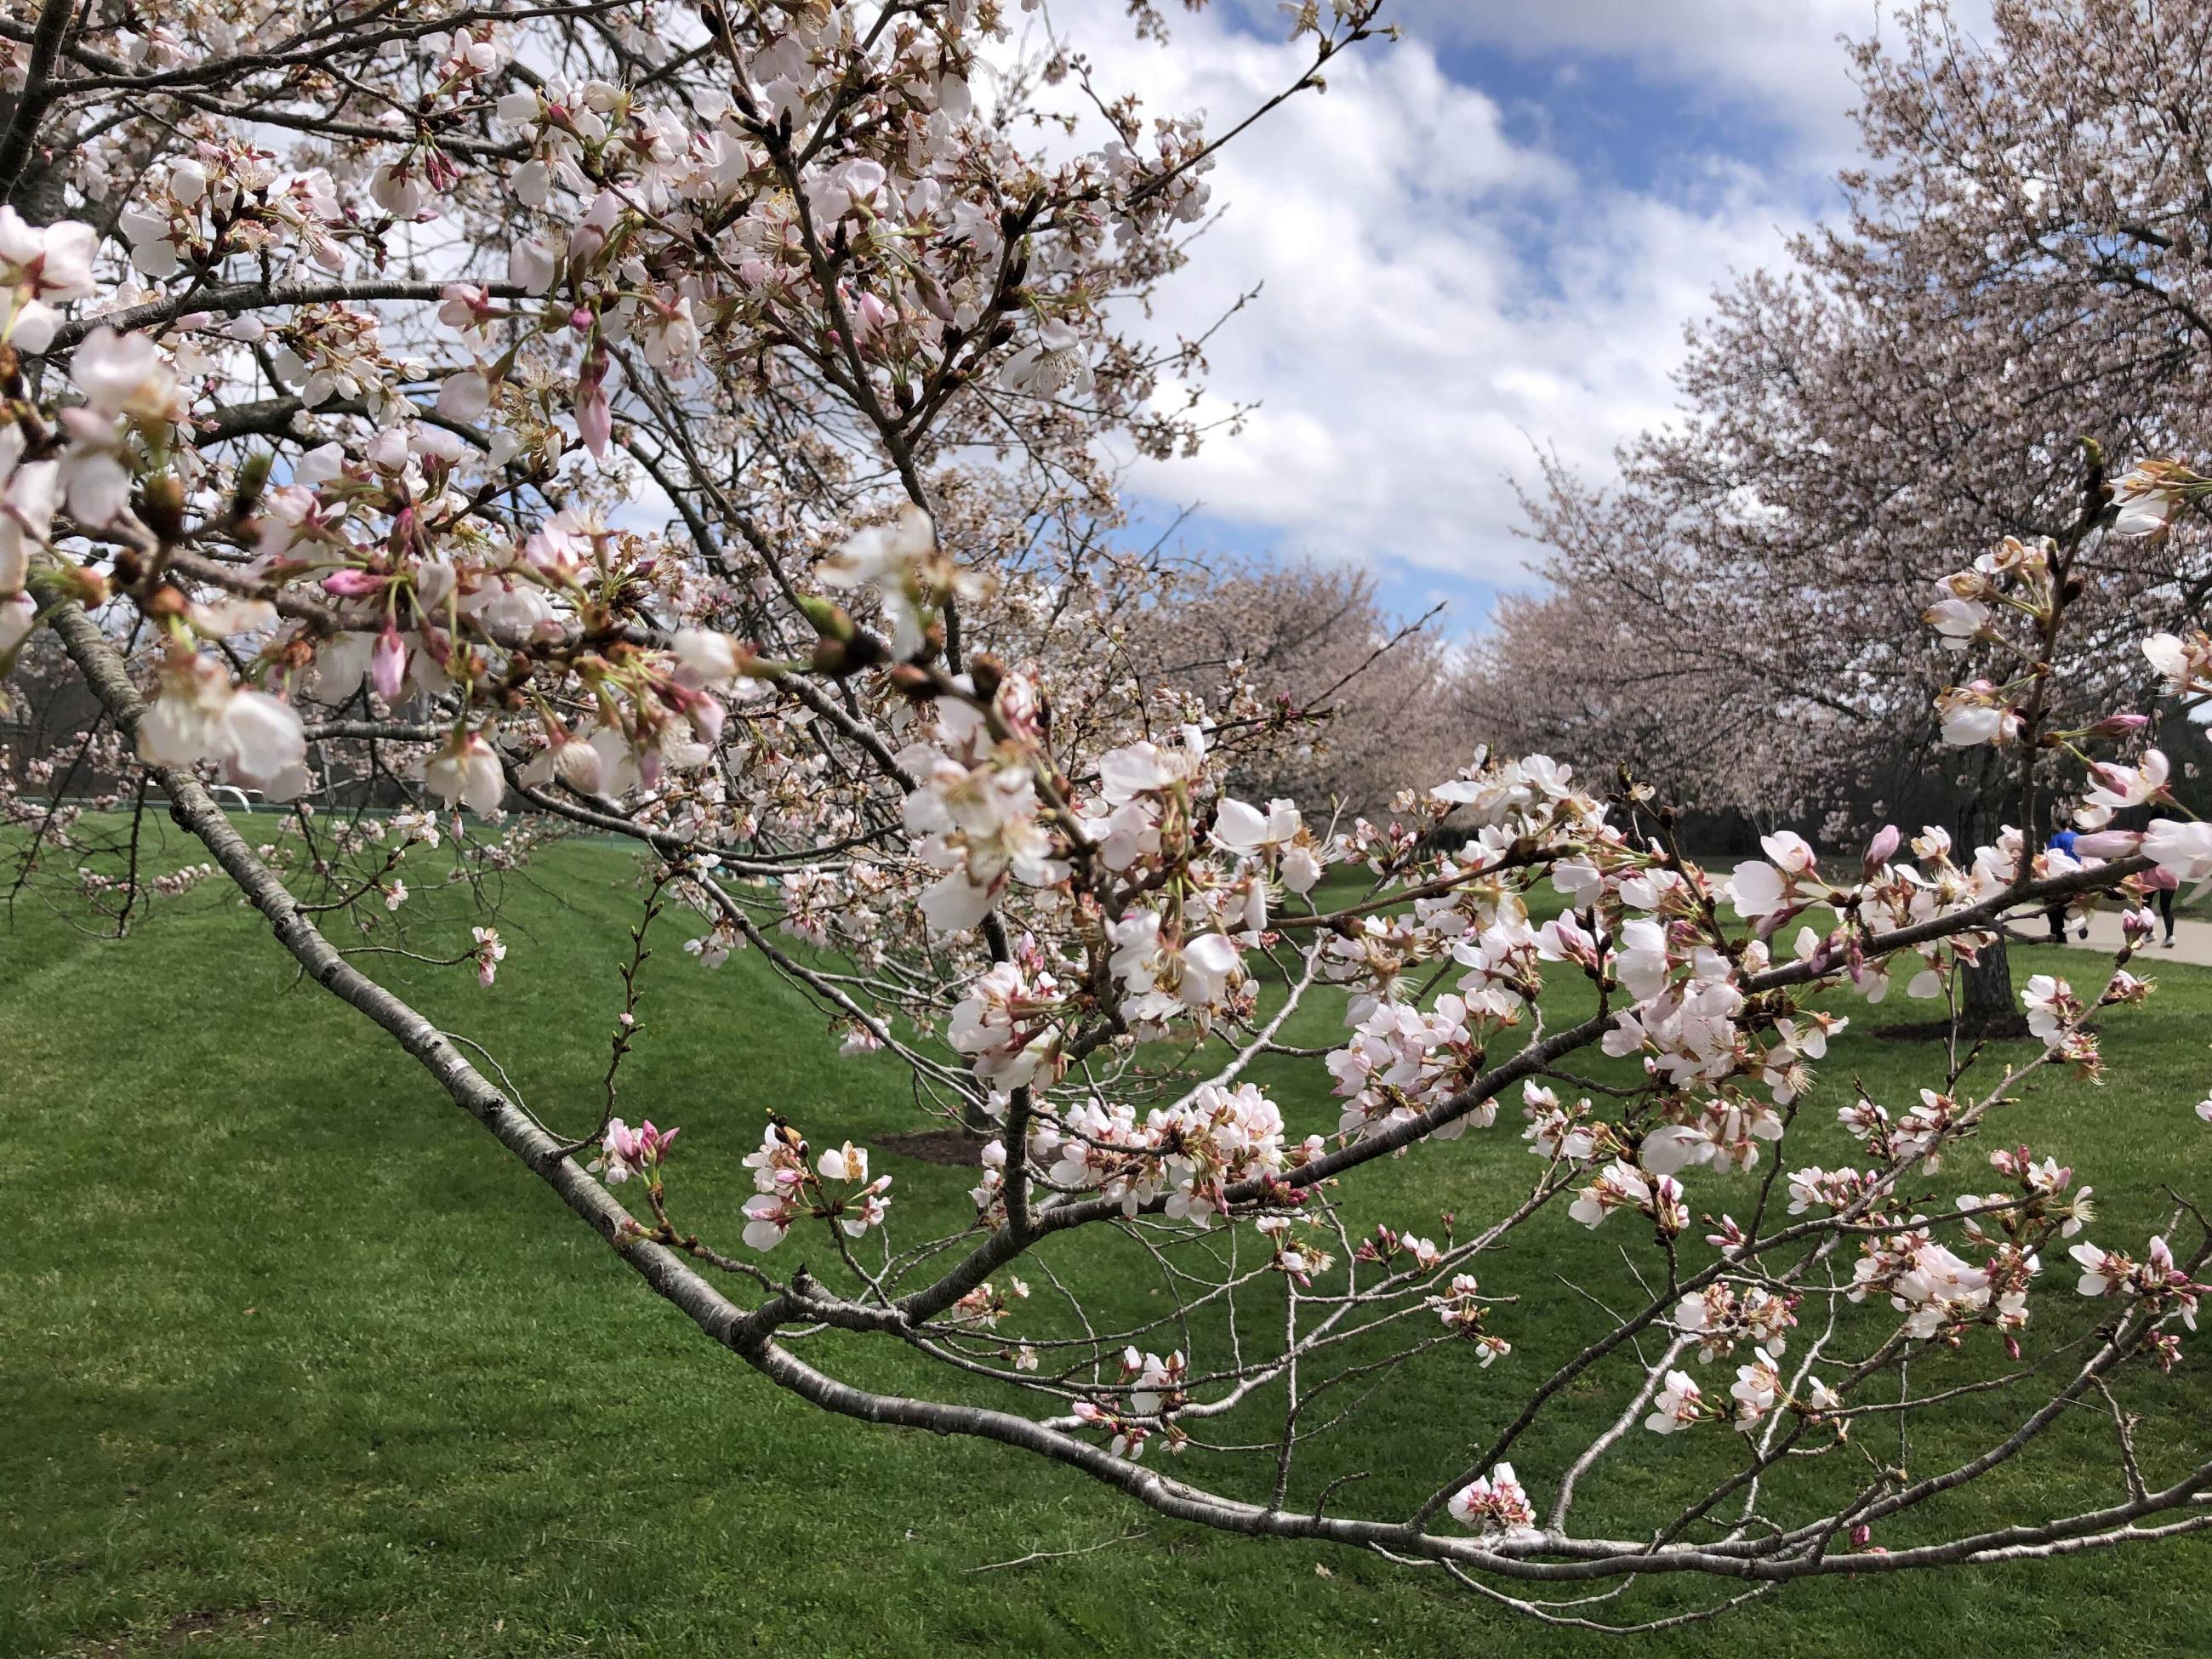 Up close cherry tree blossoms along the bike path 